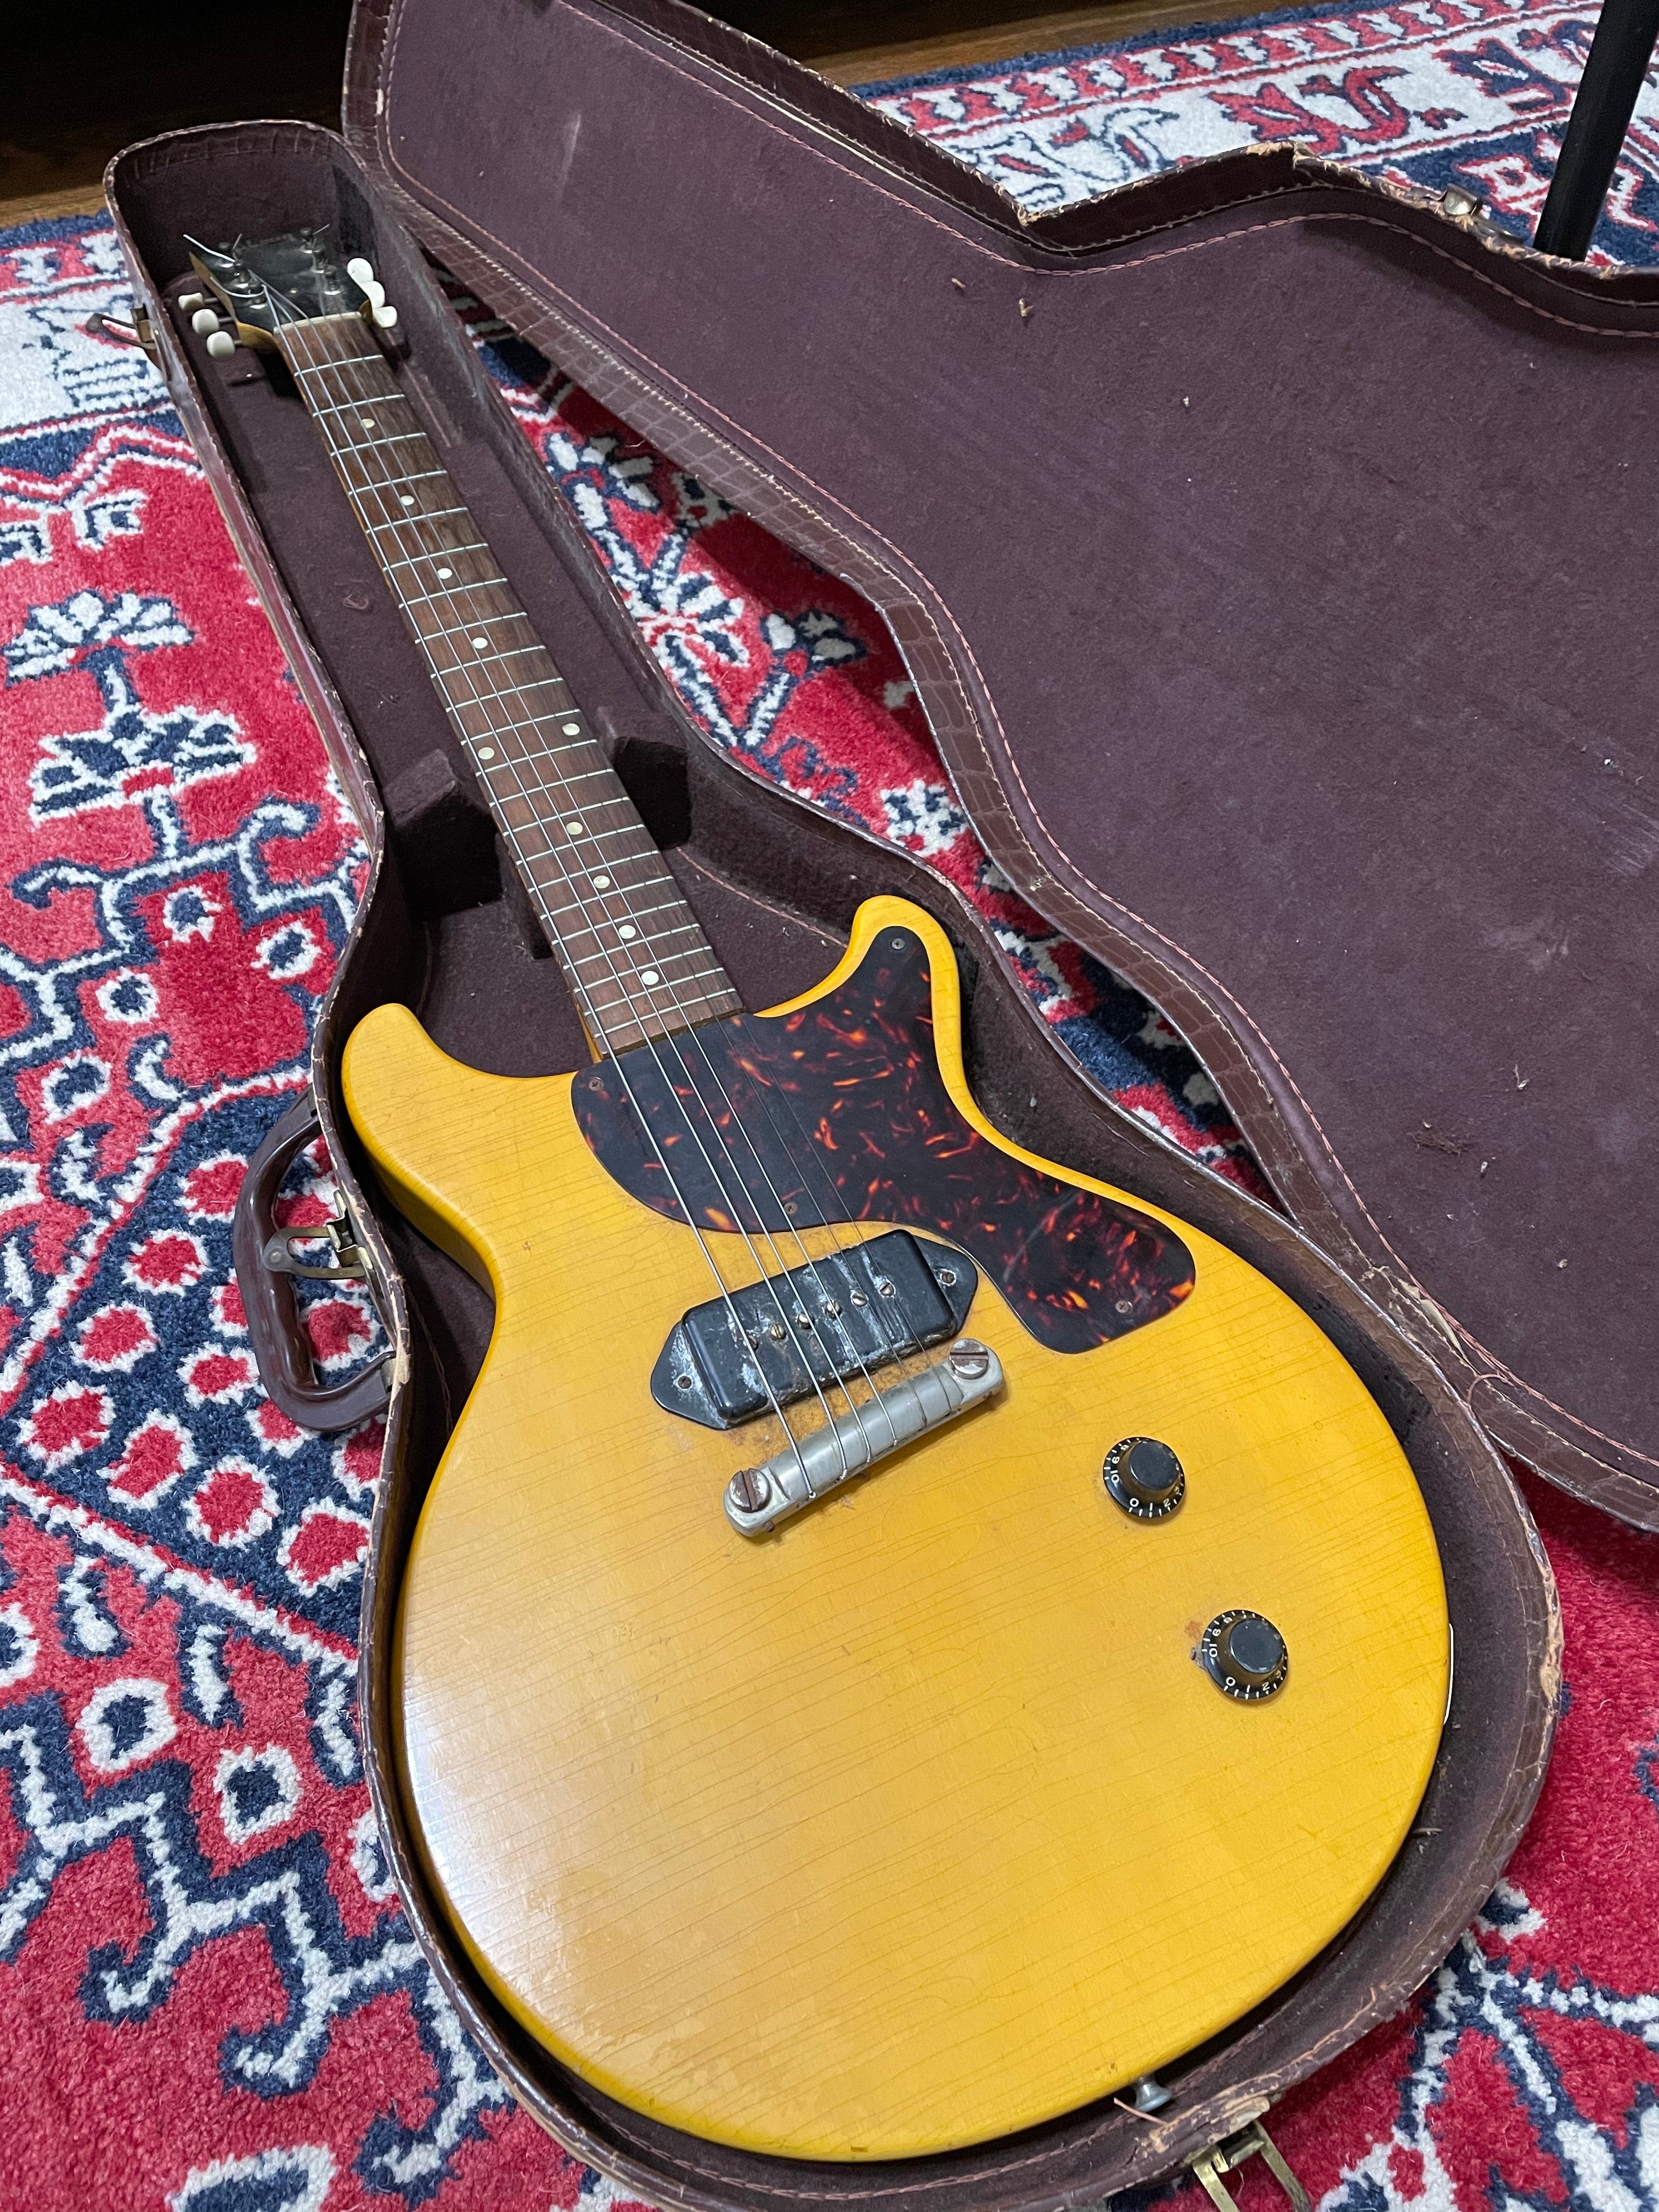 1958 Gibson Les Paul TV Model yellow guitar